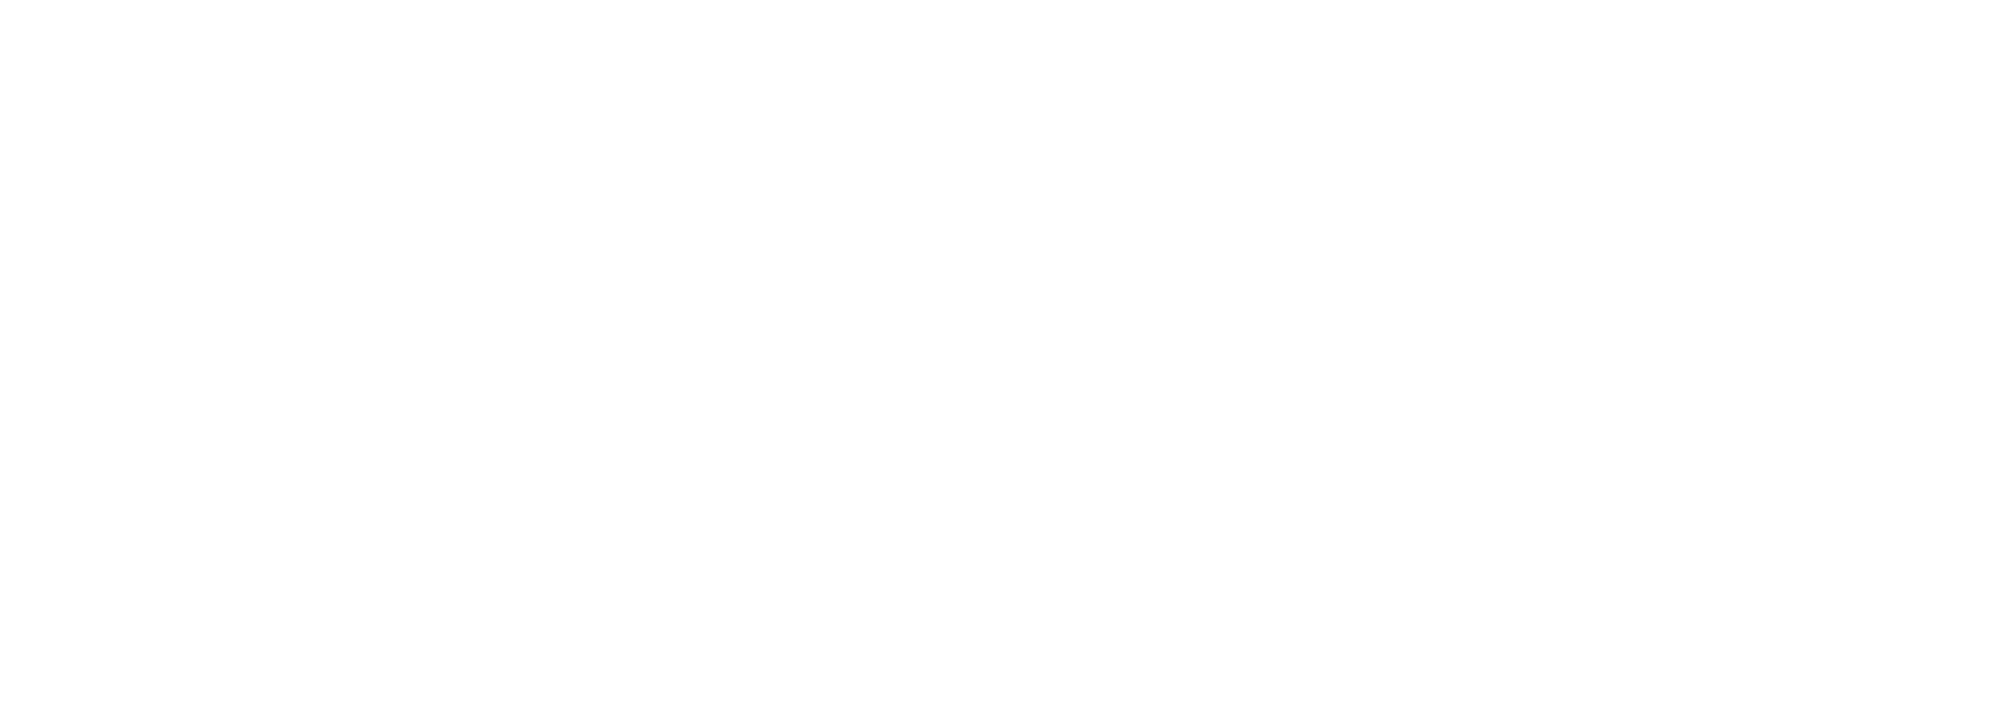 Leo Fitness